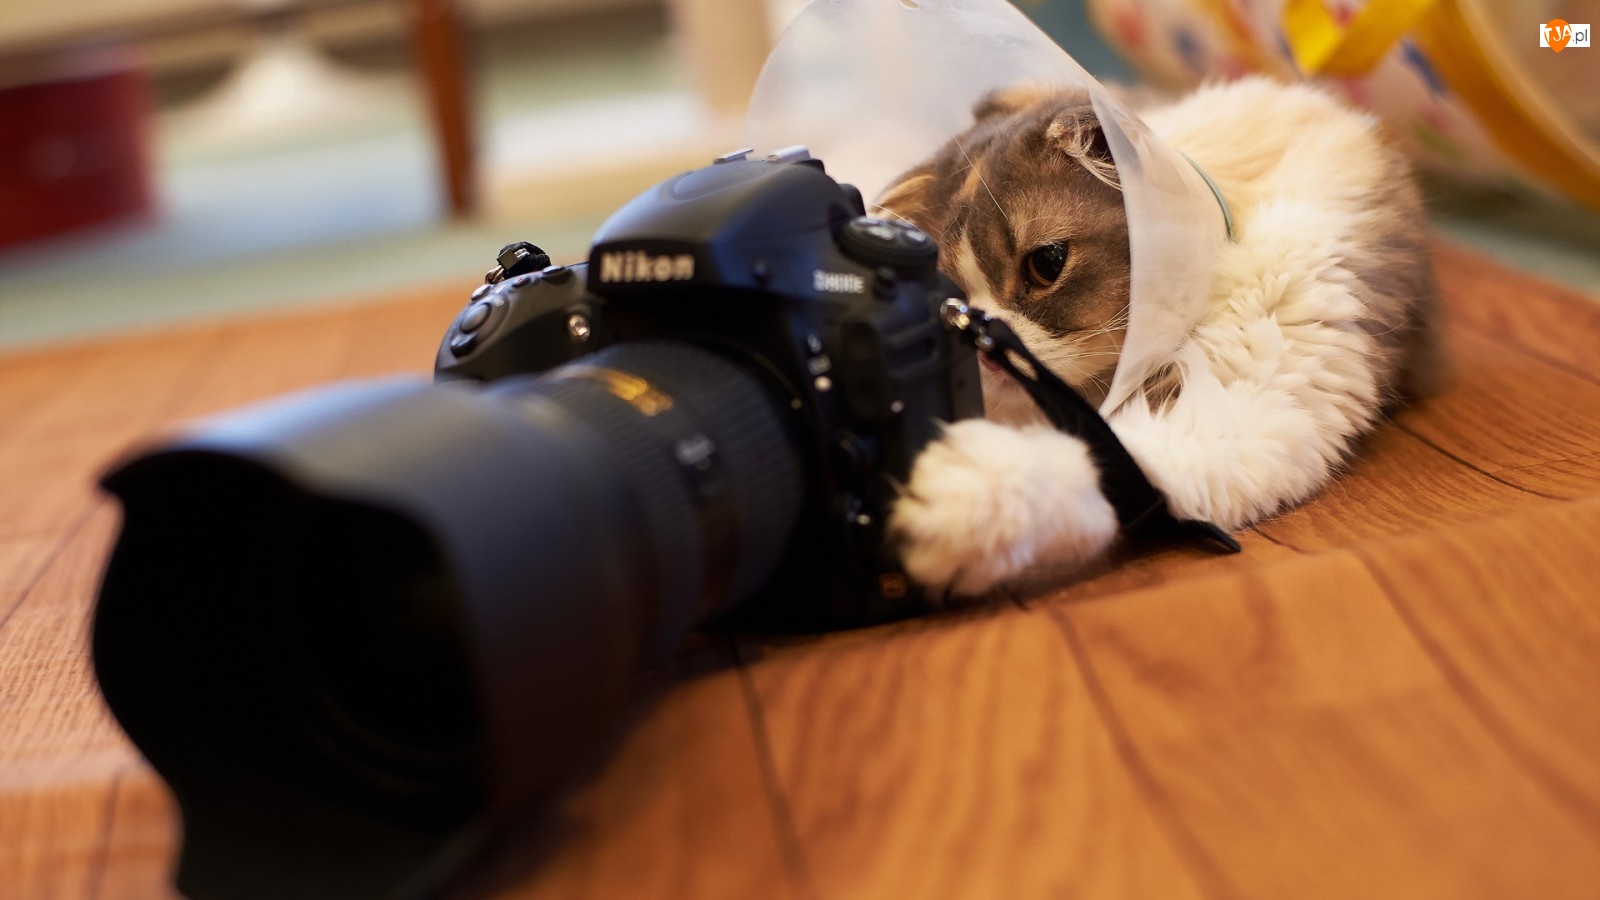 Nikon, Kot, Aparat, Fotograficzny